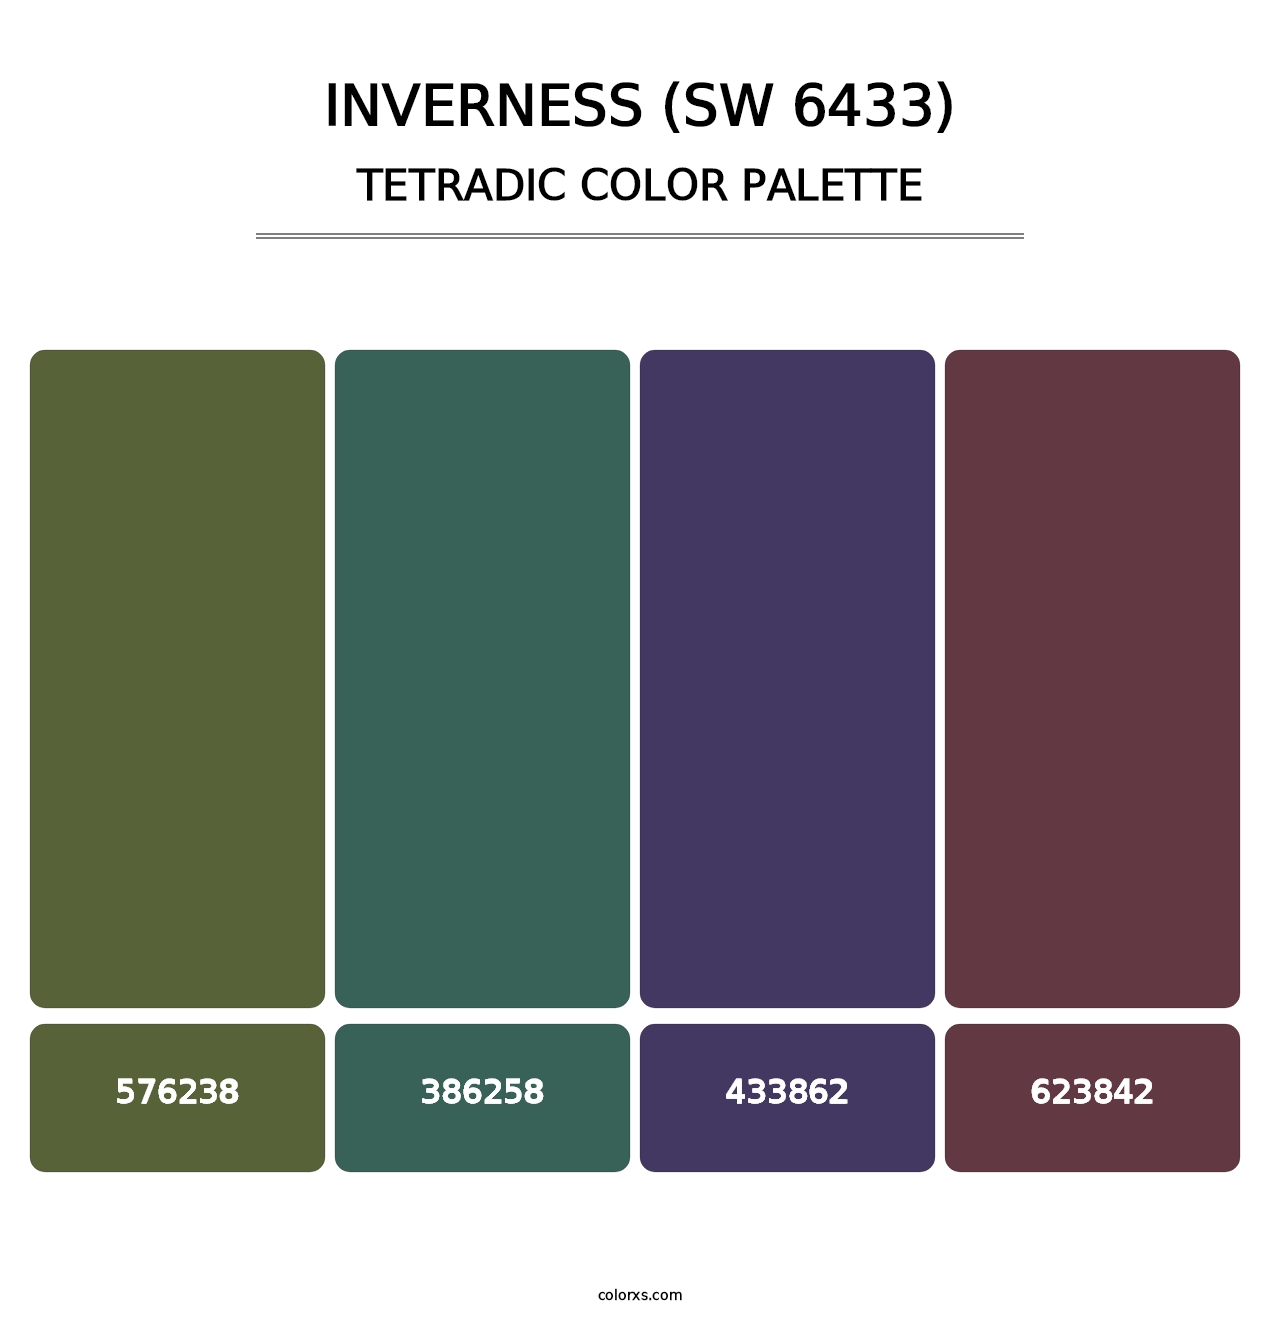 Inverness (SW 6433) - Tetradic Color Palette